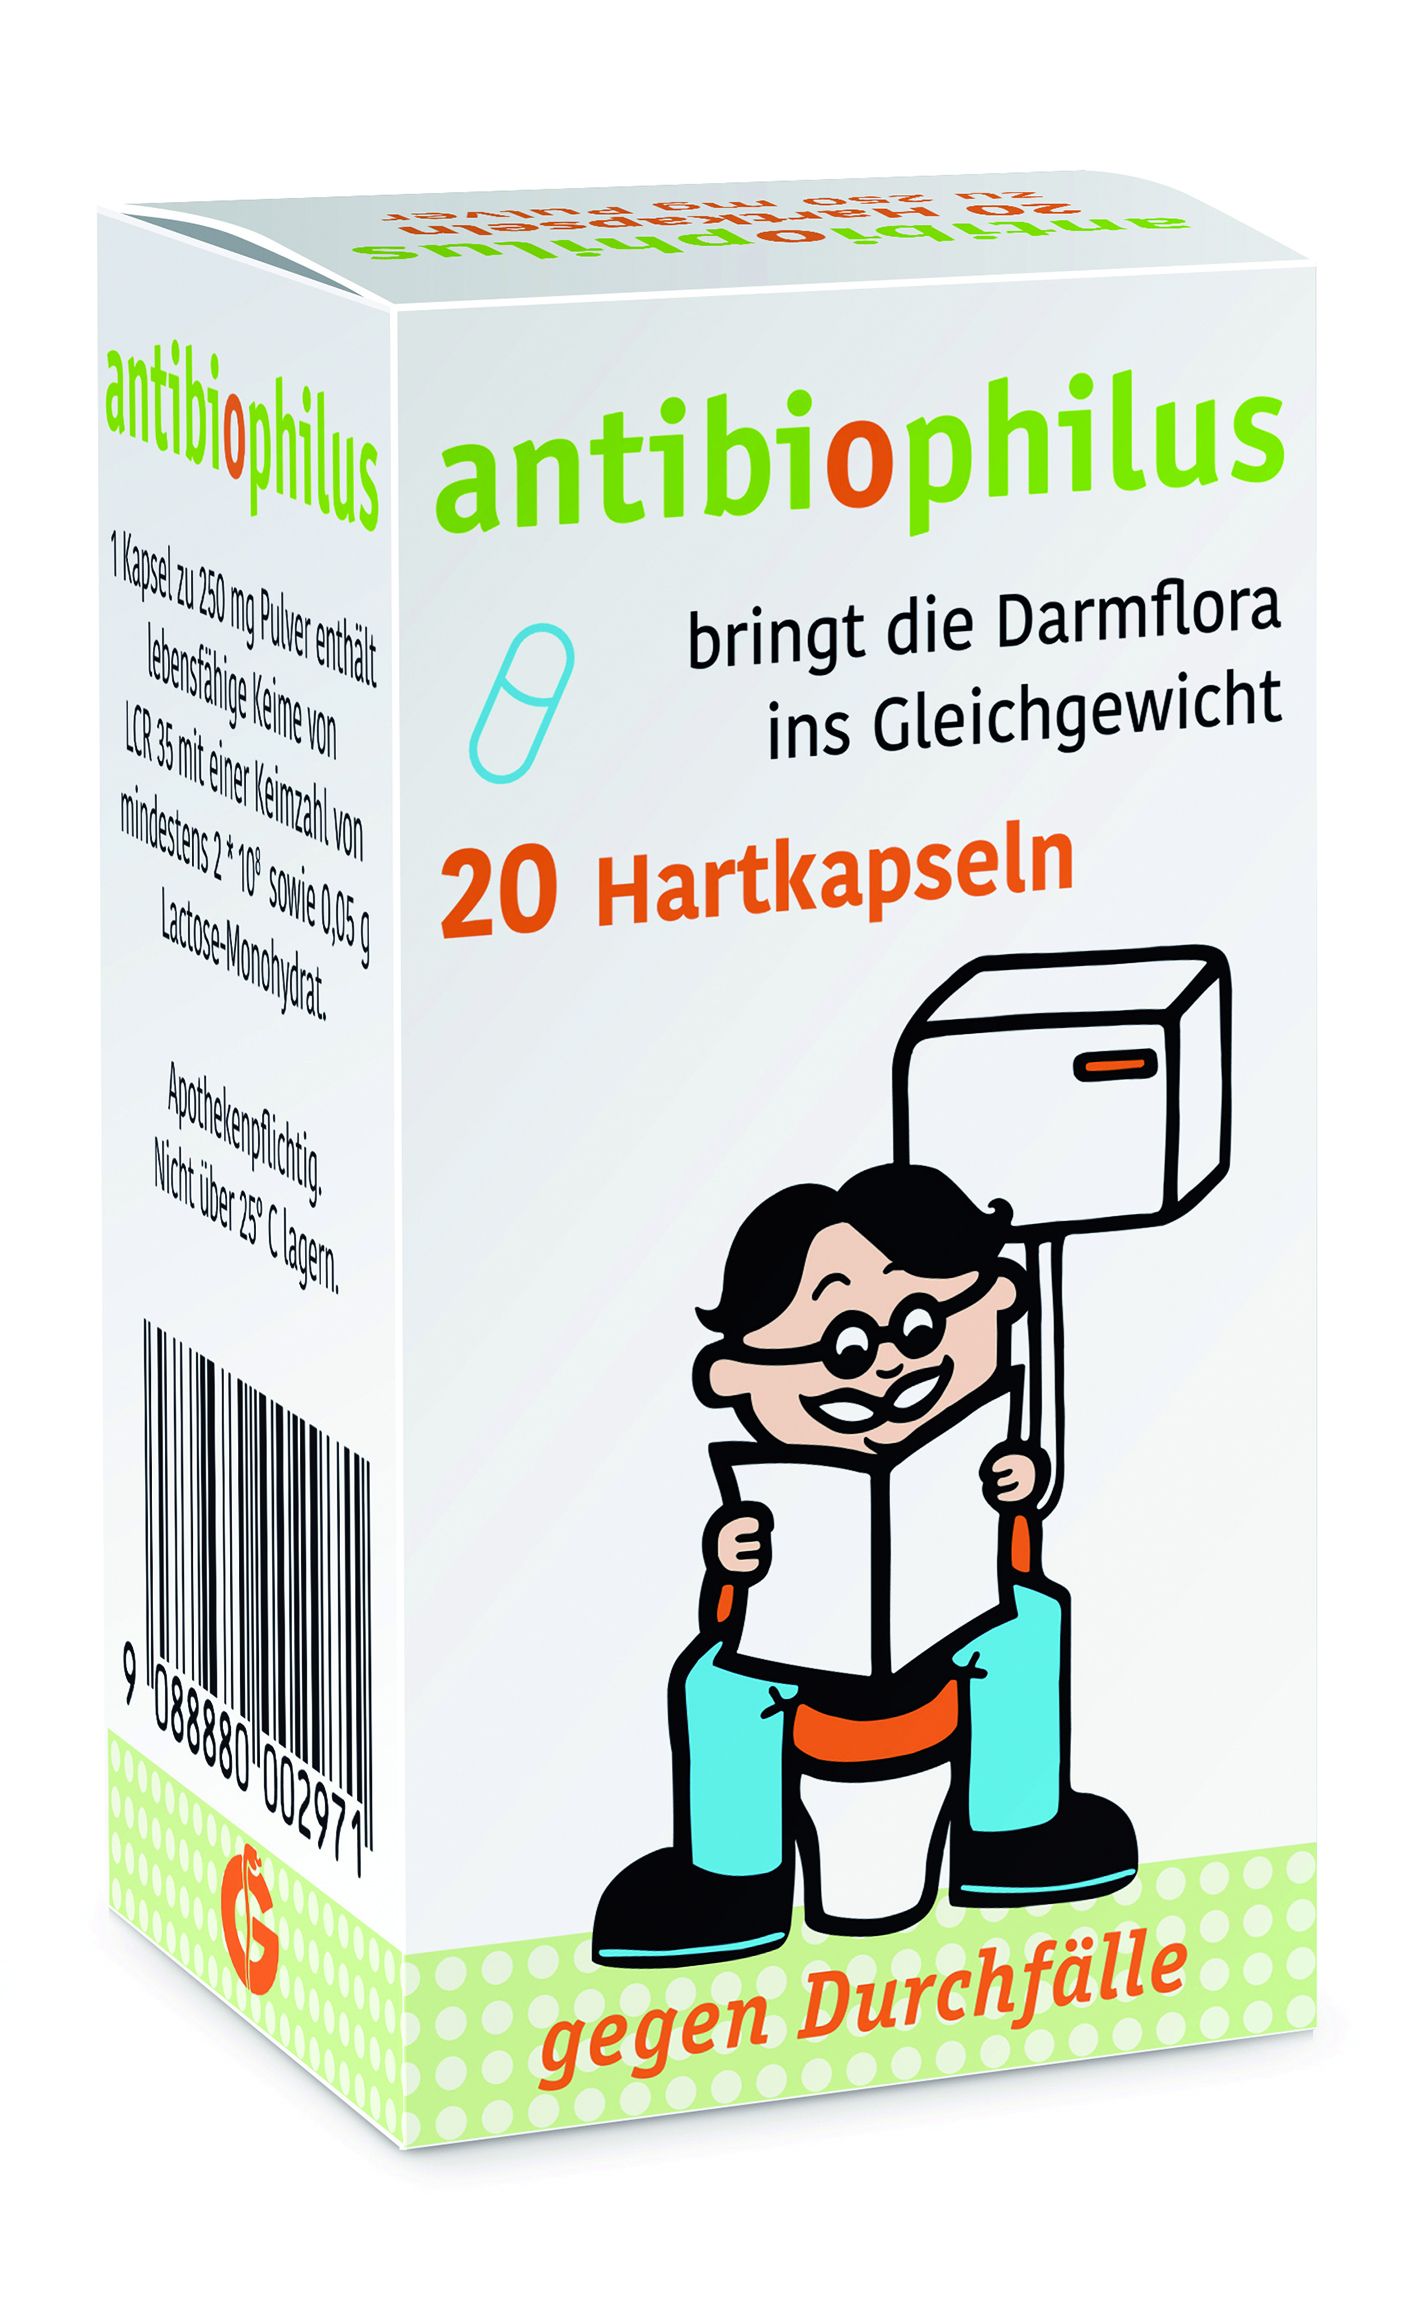 Abbildung Antibiophilus - Hartkapseln